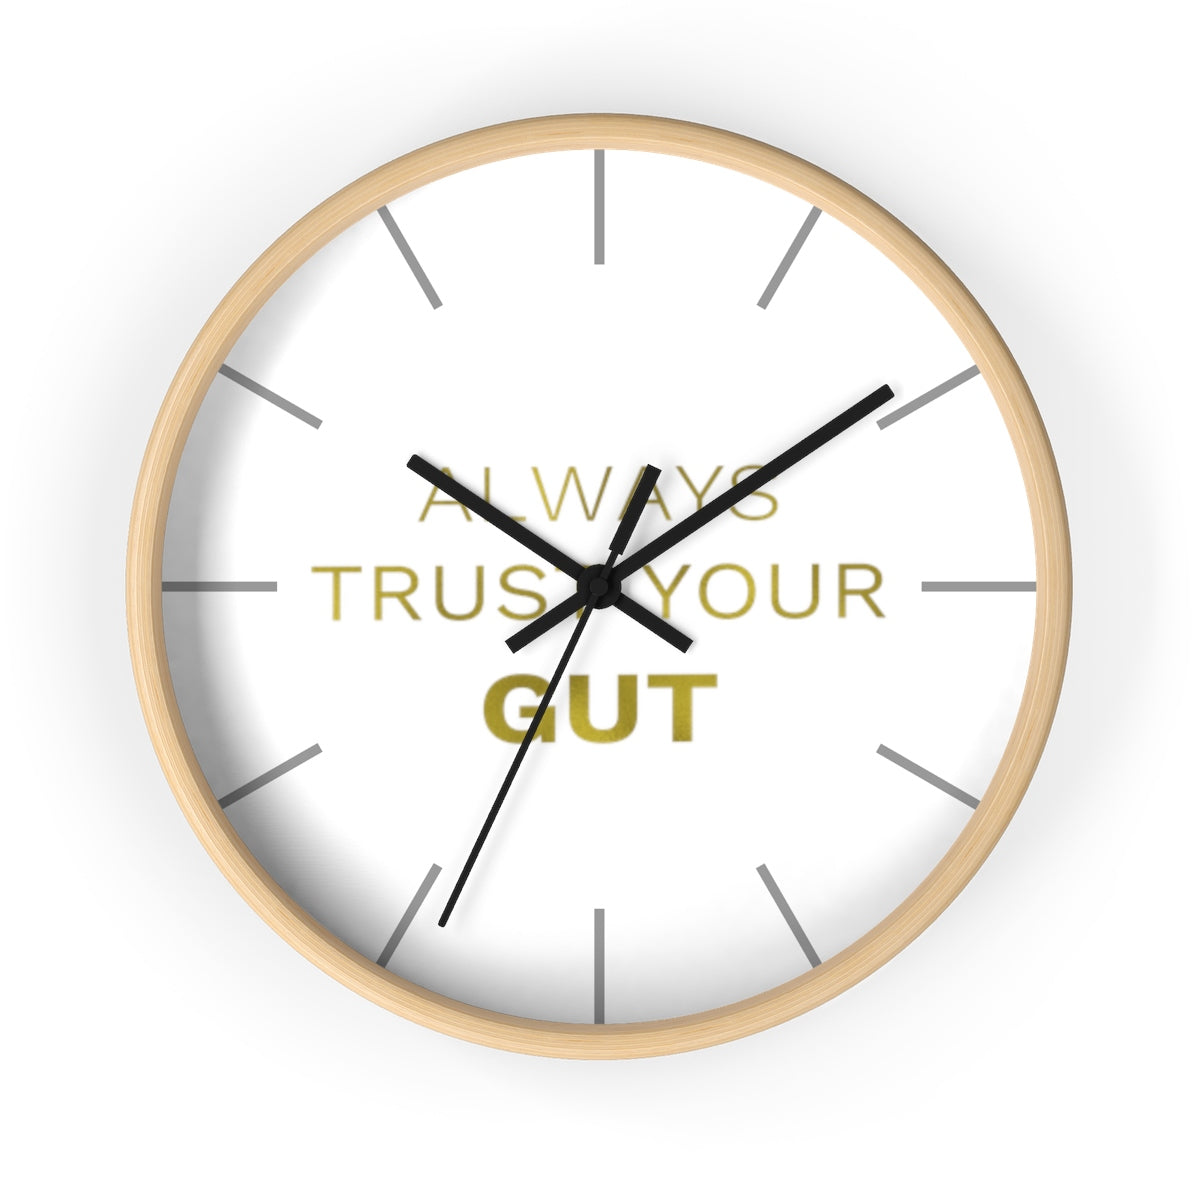 Gold Accent Graphic Text "Always Trust Your Gut" Motivational 10 inch Diameter Wall Clock - Made in USA-Wall Clock-Wooden-Black-Heidi Kimura Art LLC